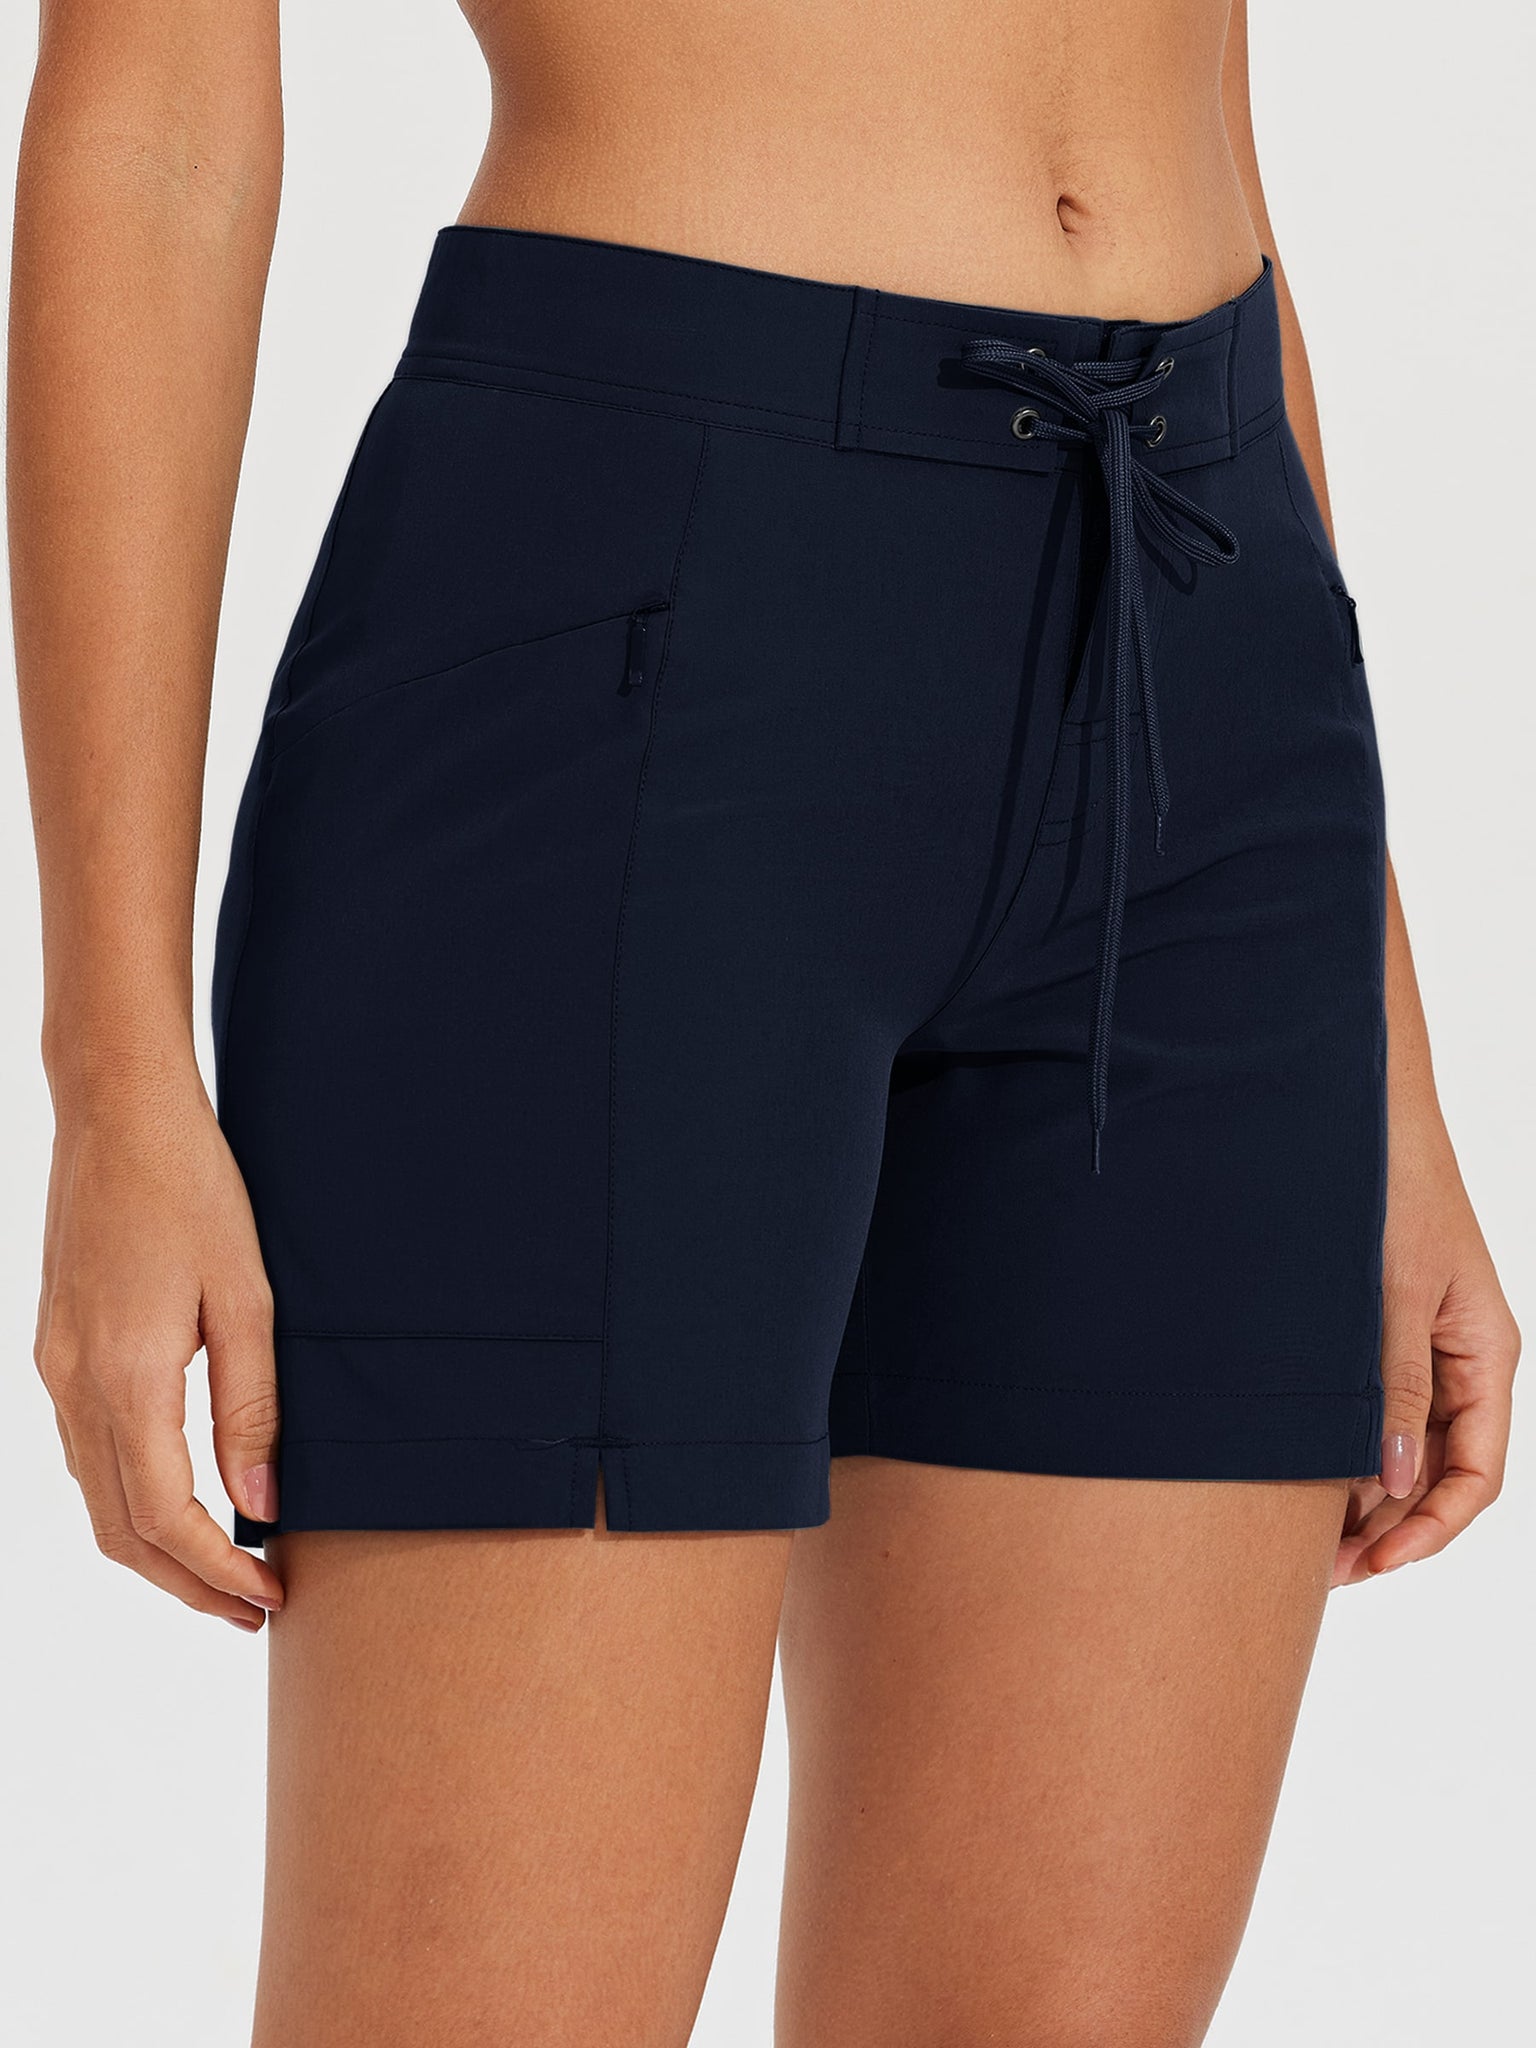 Women's Fixed Waist Board Shorts_Navy_model2